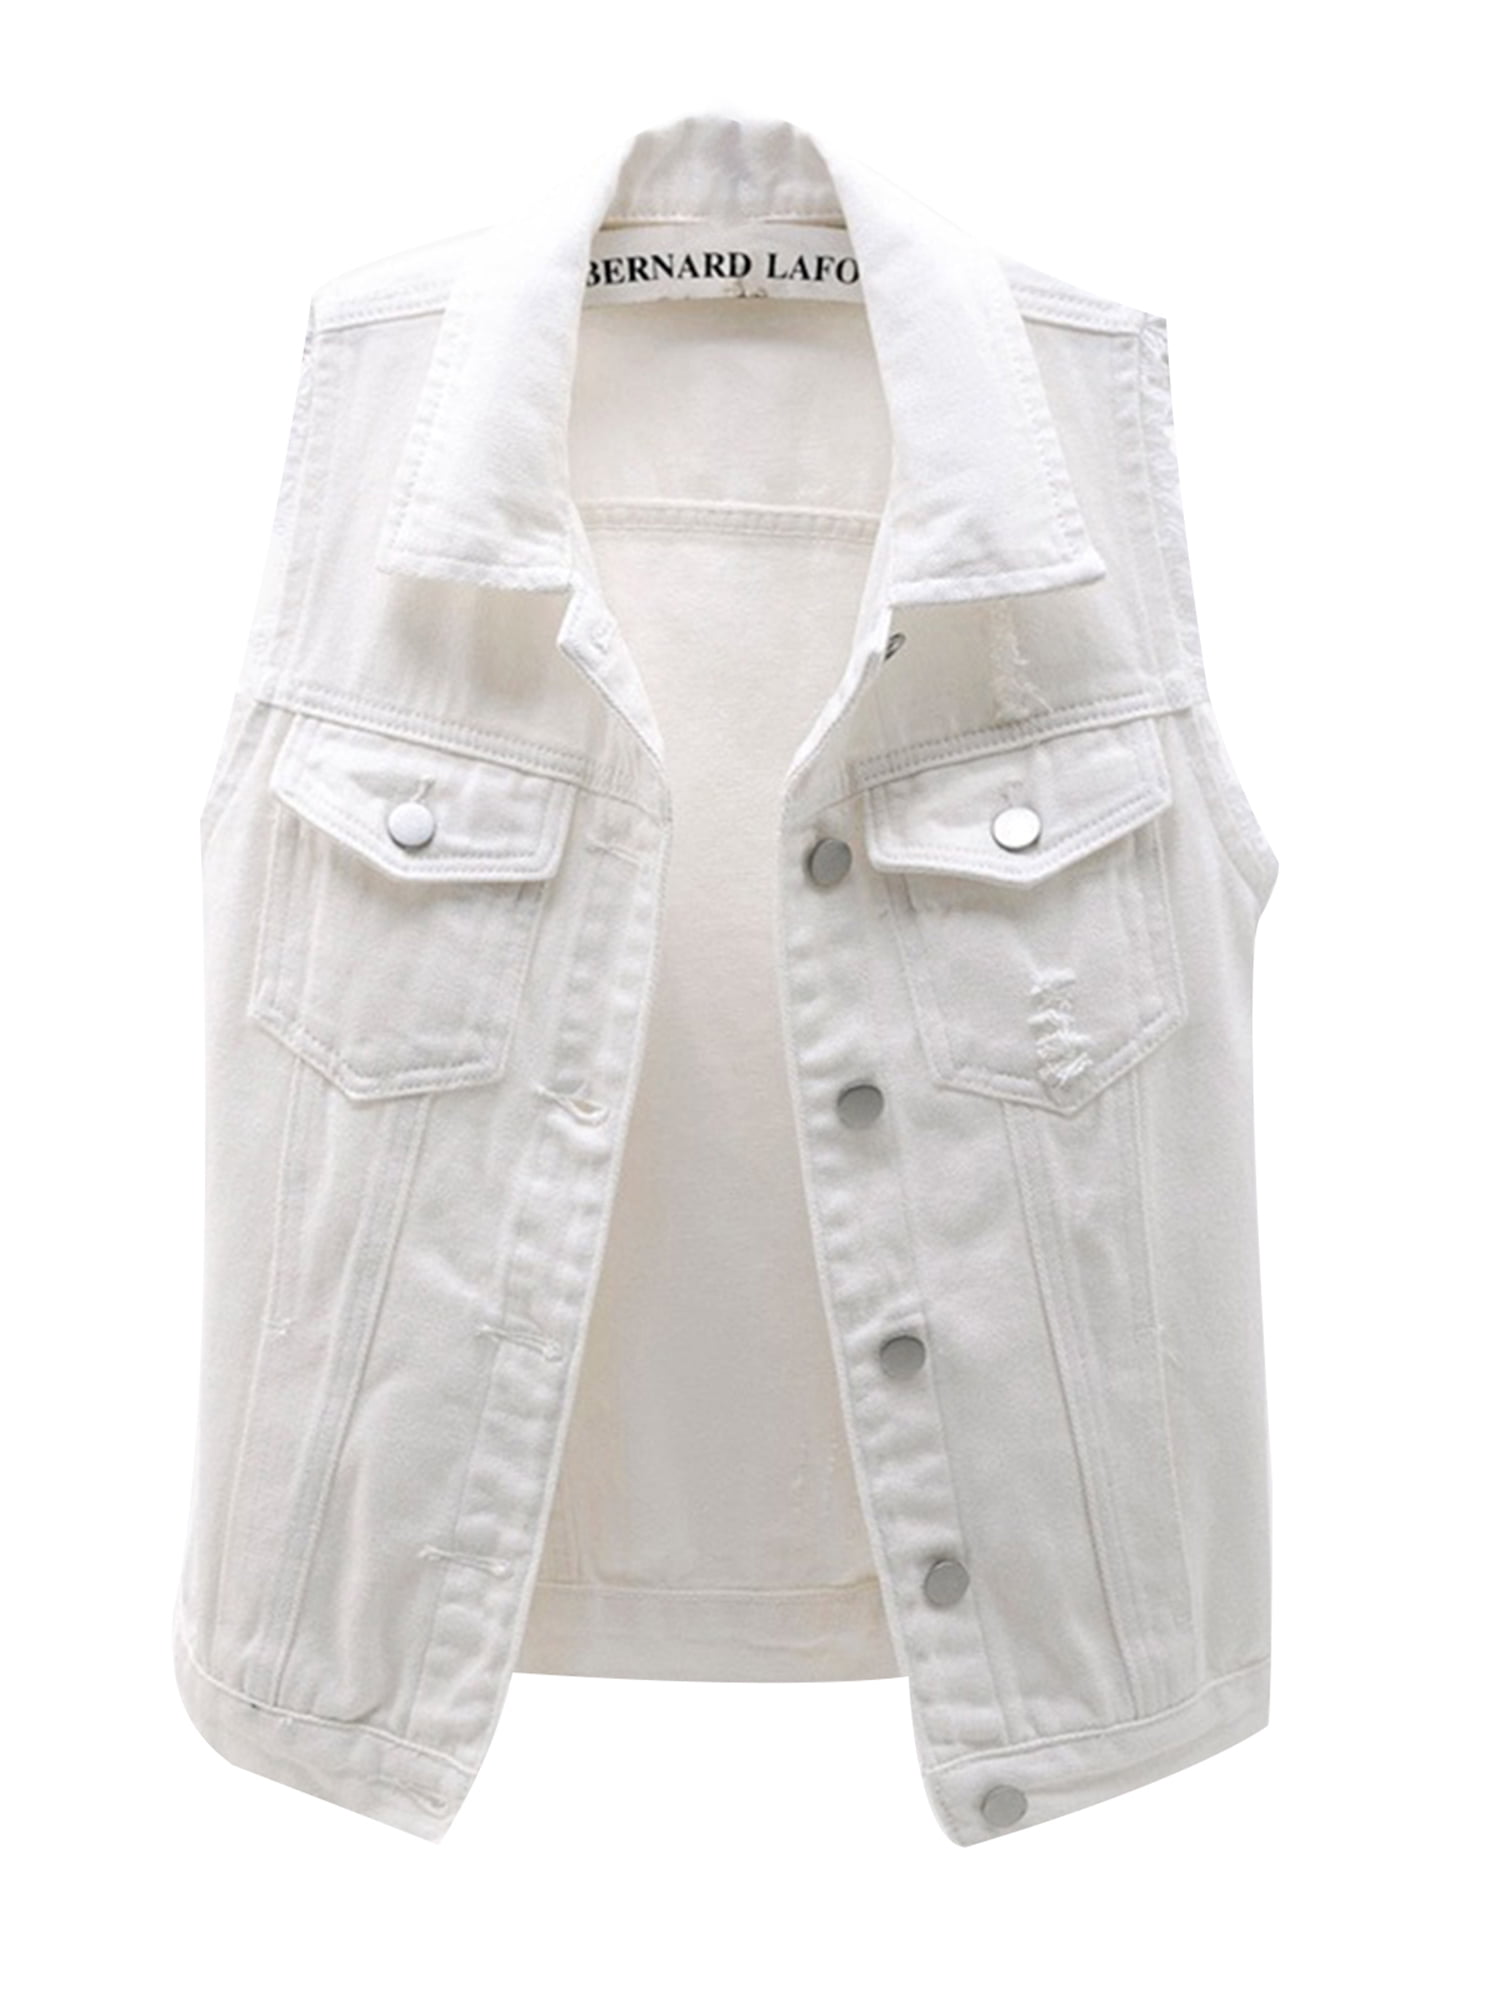 Twcx Womens Wash Sleeveless Ripped Plus Size Pockets Demin Jean Jackets Vest